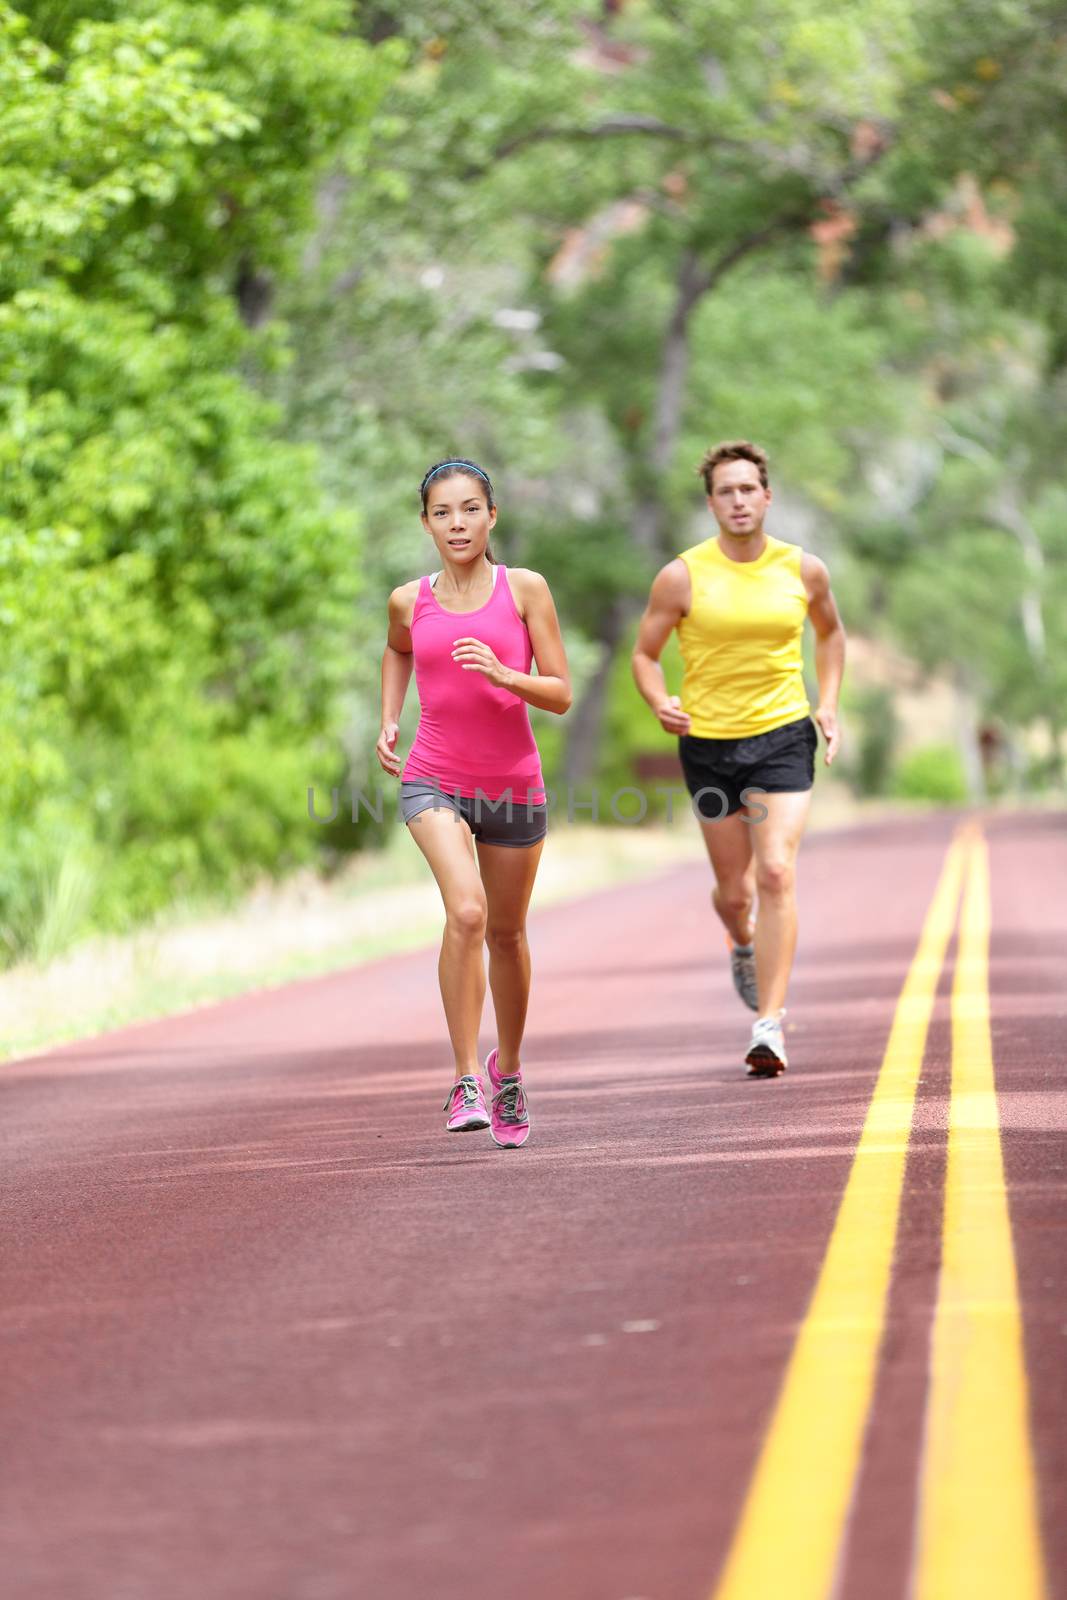 Running Health and fitness - runners jogging by Maridav